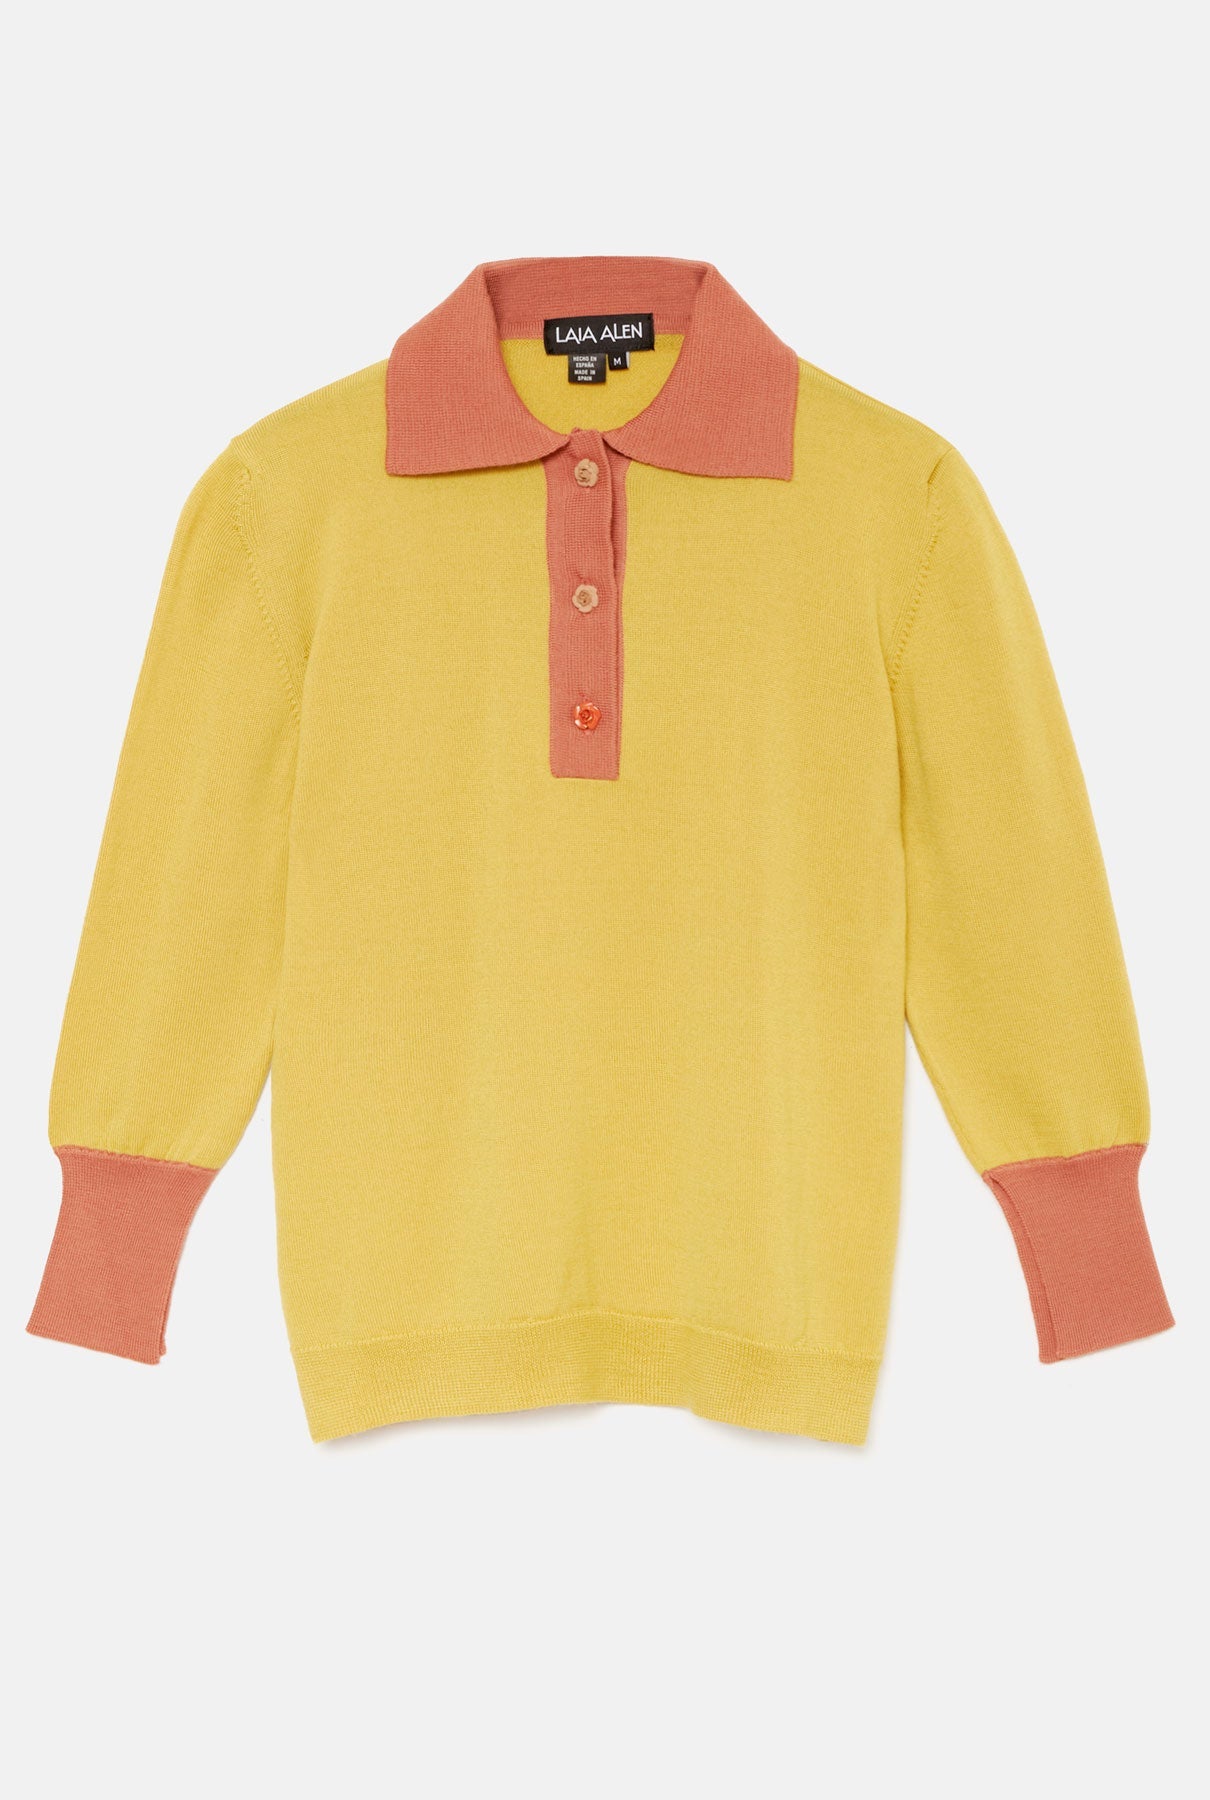 Emily Yellow T-Shirts & tops Laia Alen 